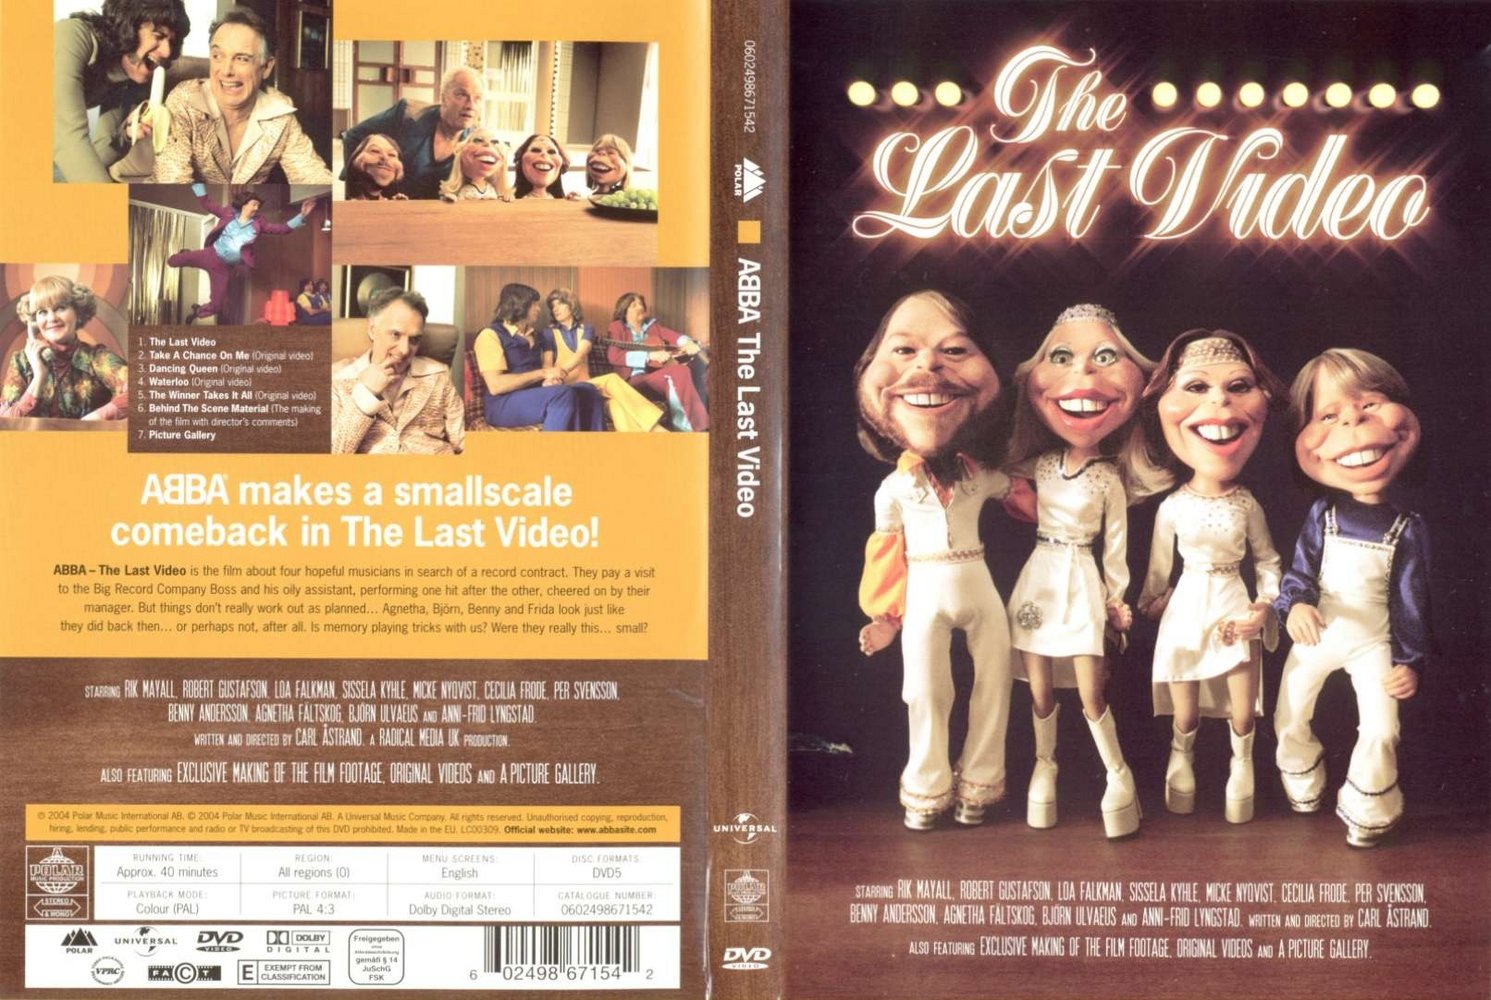 Jaquette DVD Abba the last video